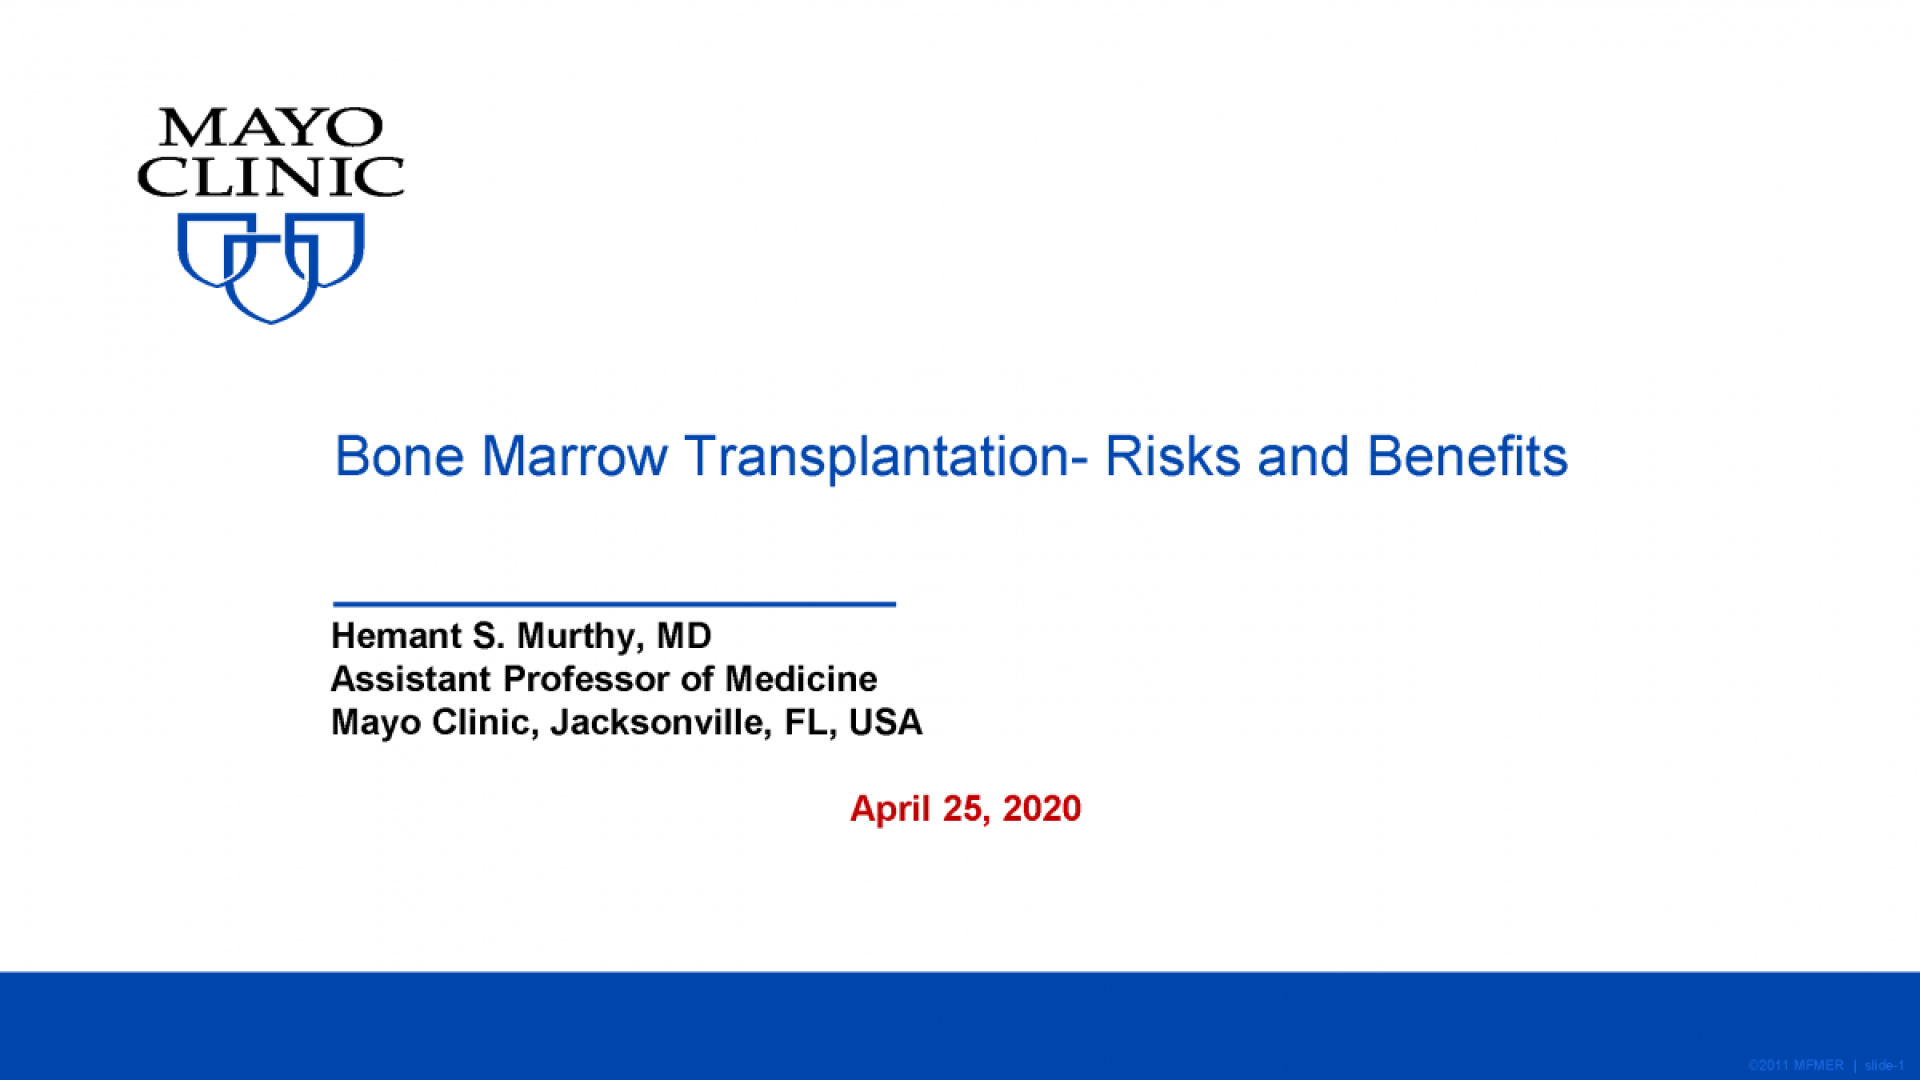 Bone Marrow Transplant - Spring Virtual Conference